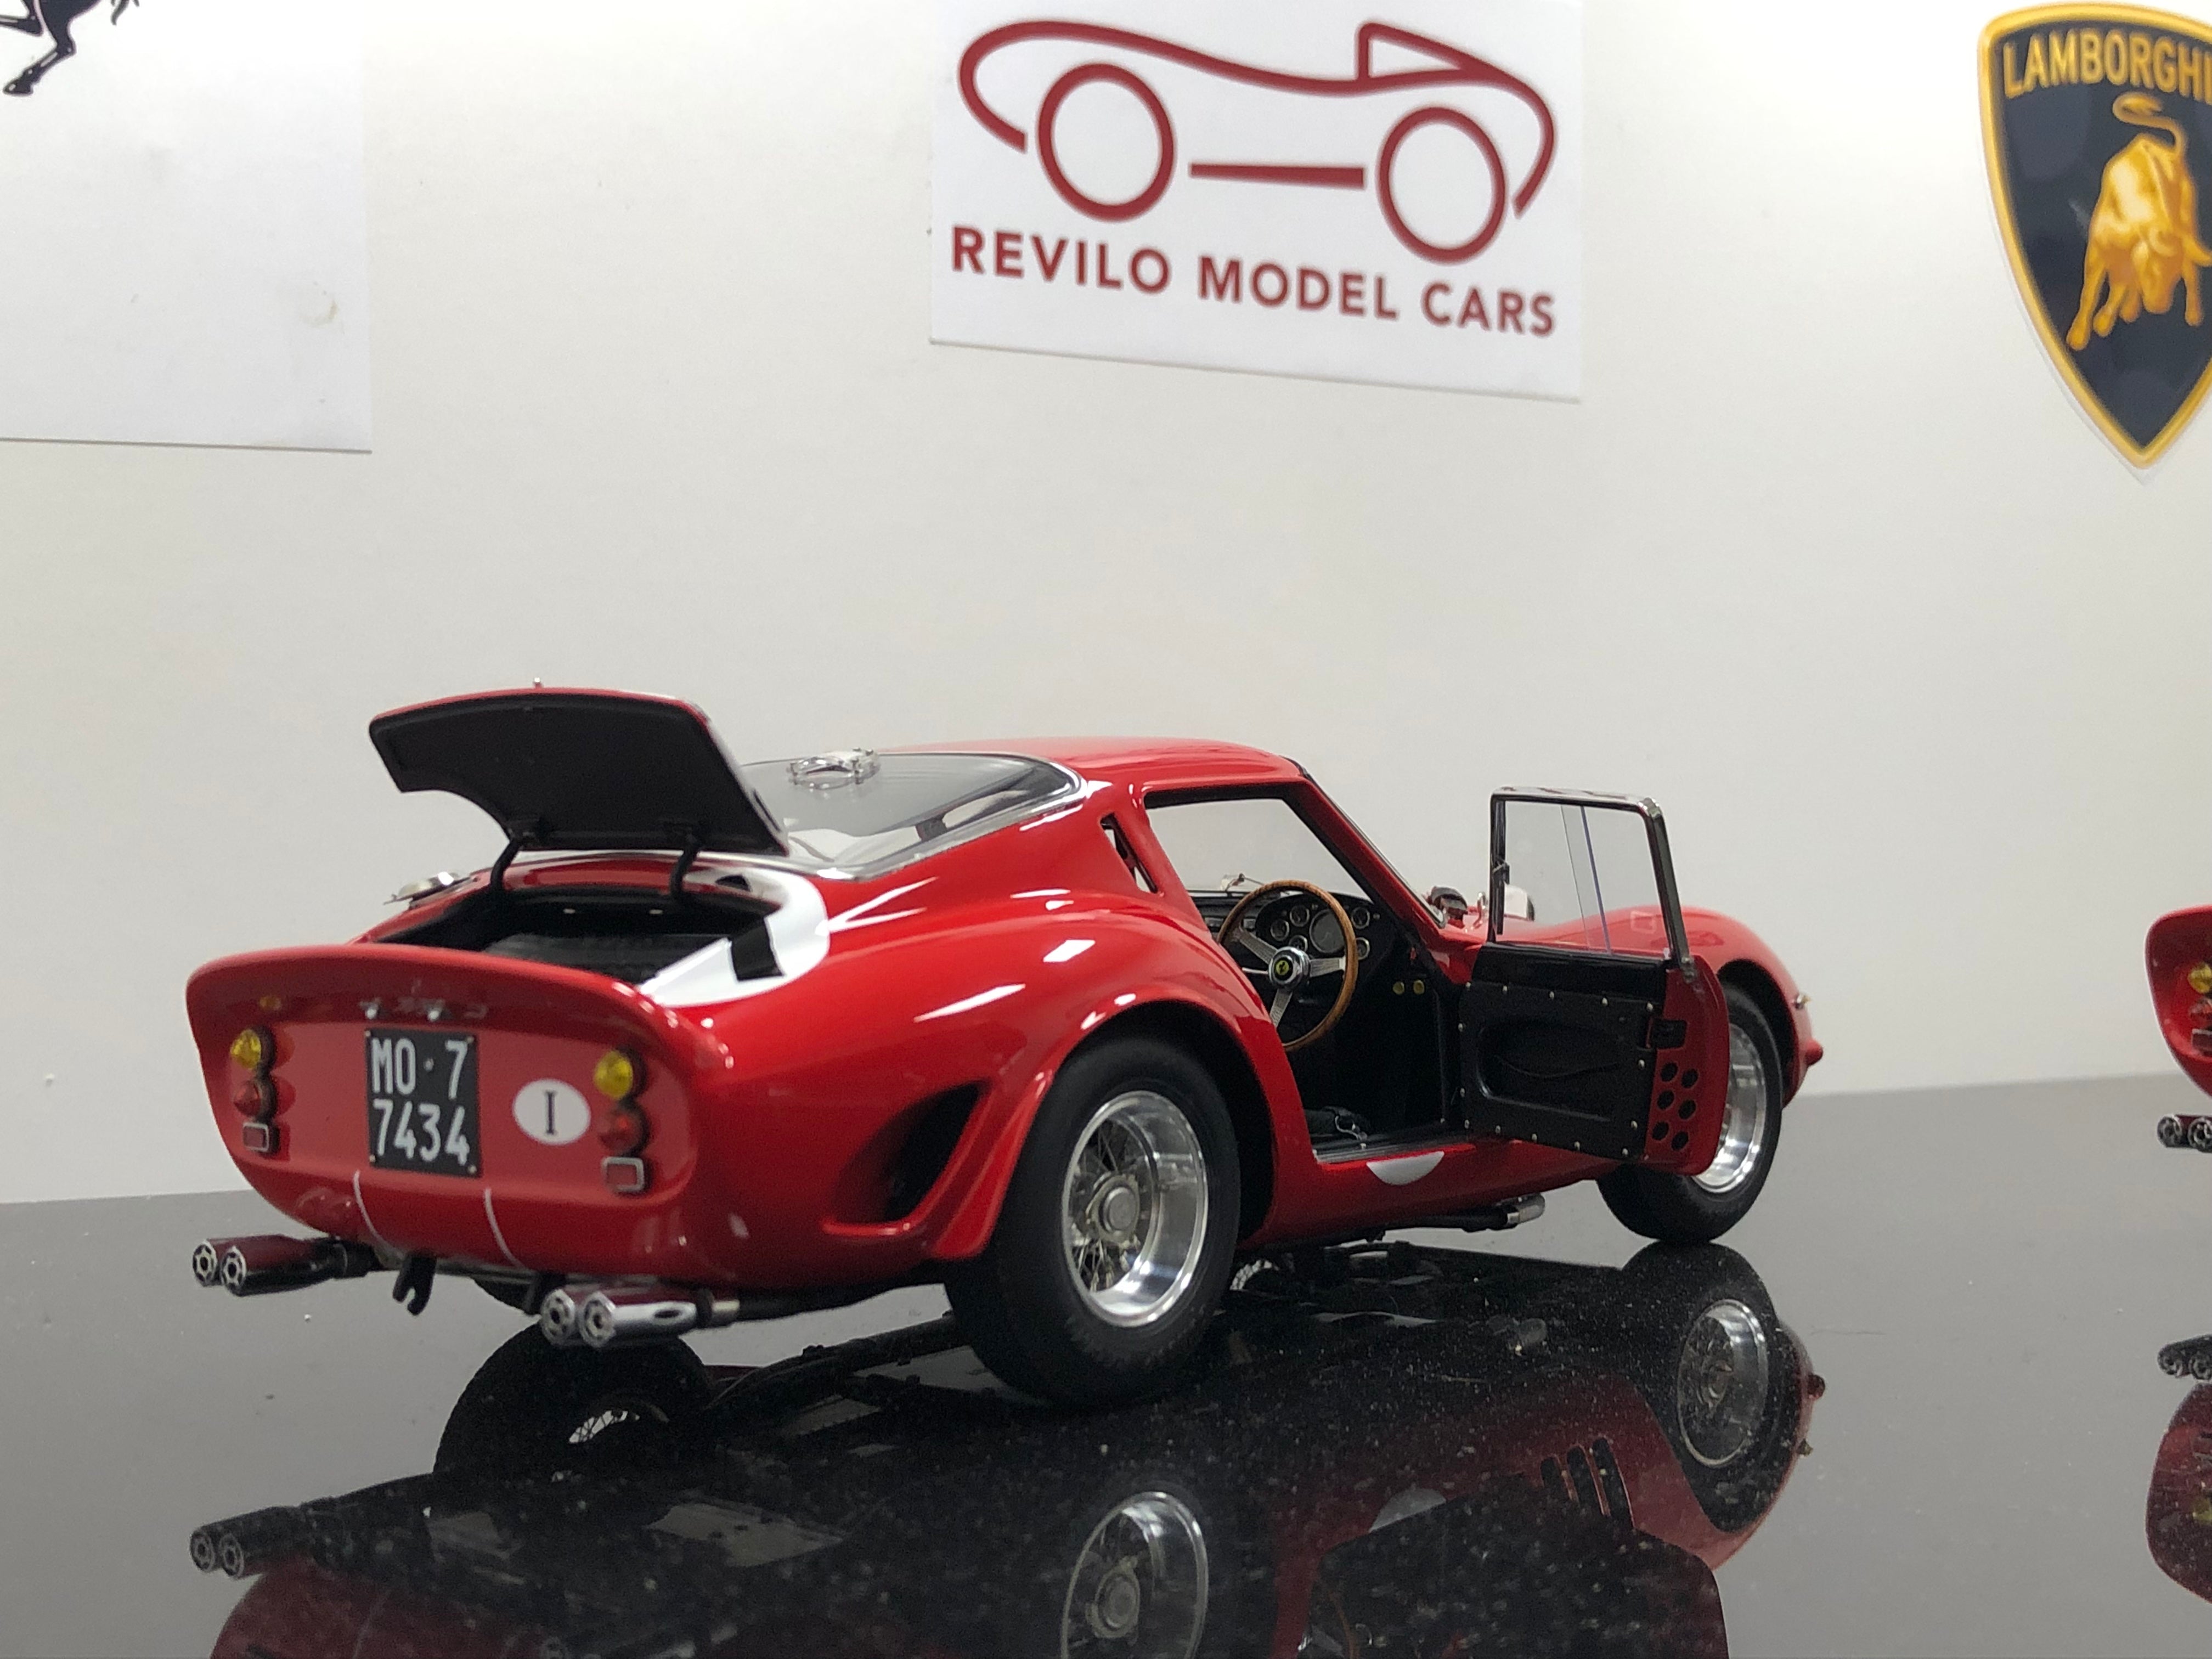 CMC 1:18 scale 1962 Ferrari 250 GTO M249 #11 John Surtees with signed plaque